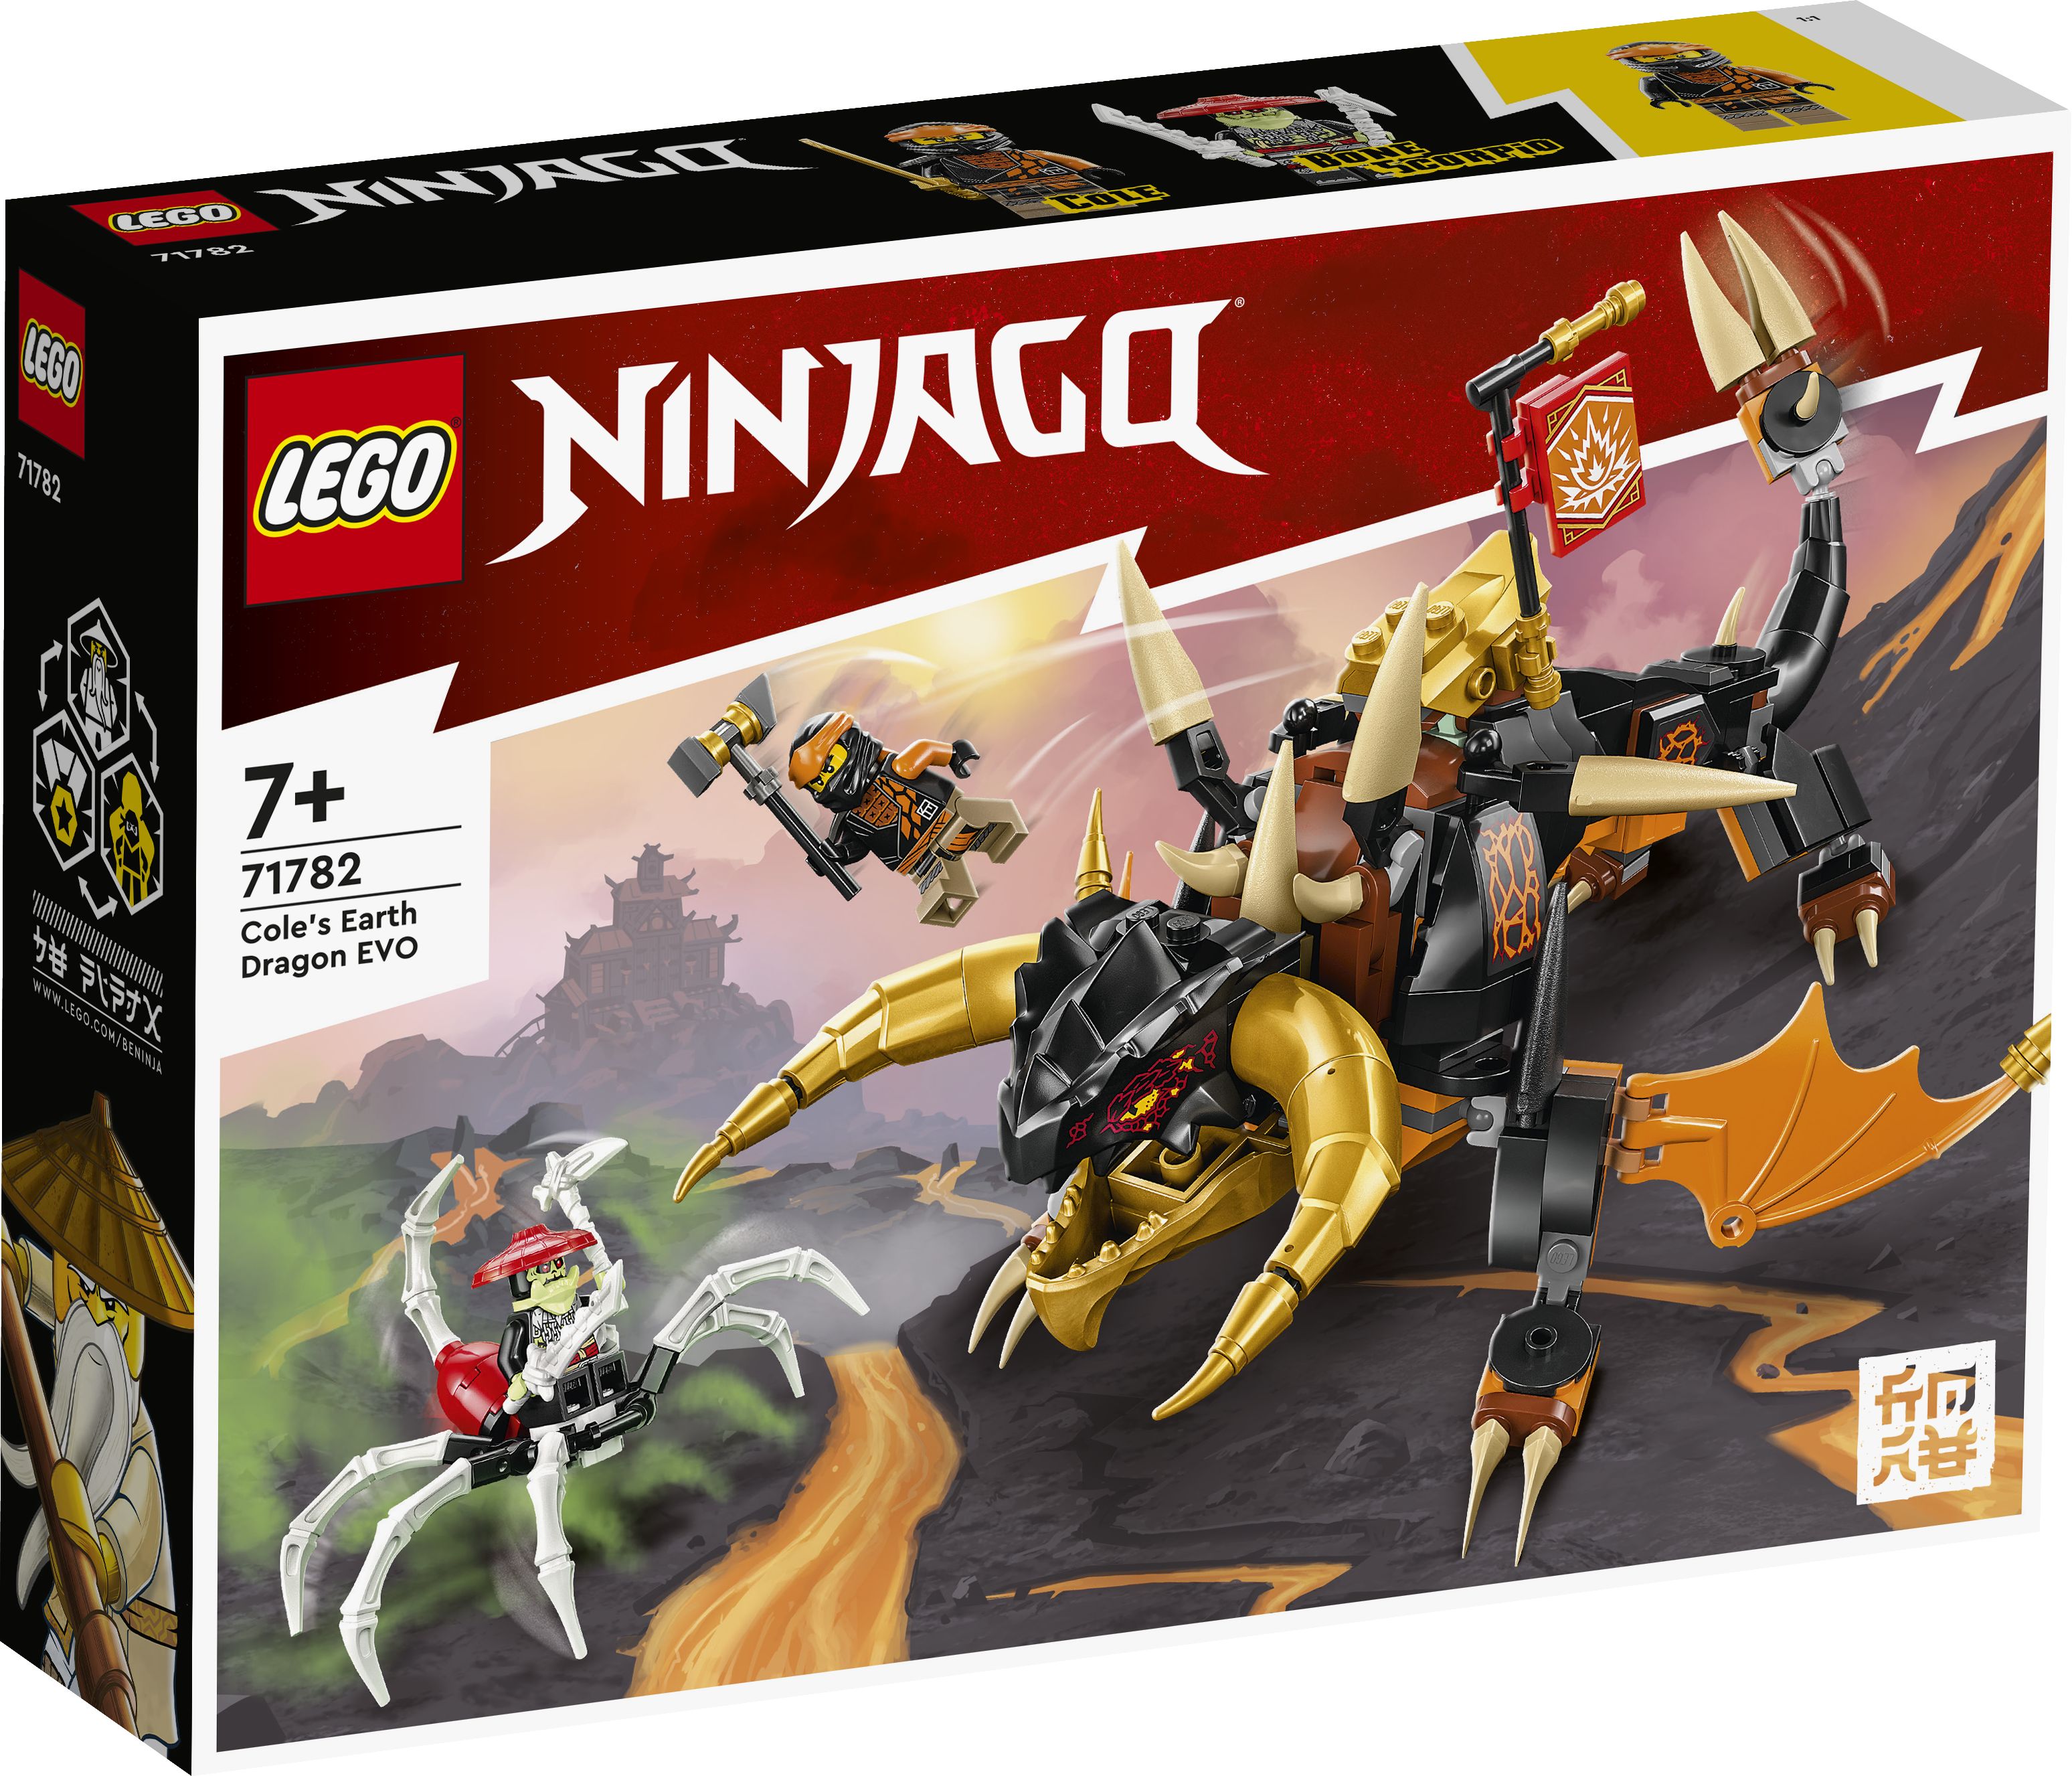 LEGO Ninjago 71782 Coles Erddrache EVO LEGO_71782_Box1_v29.jpg